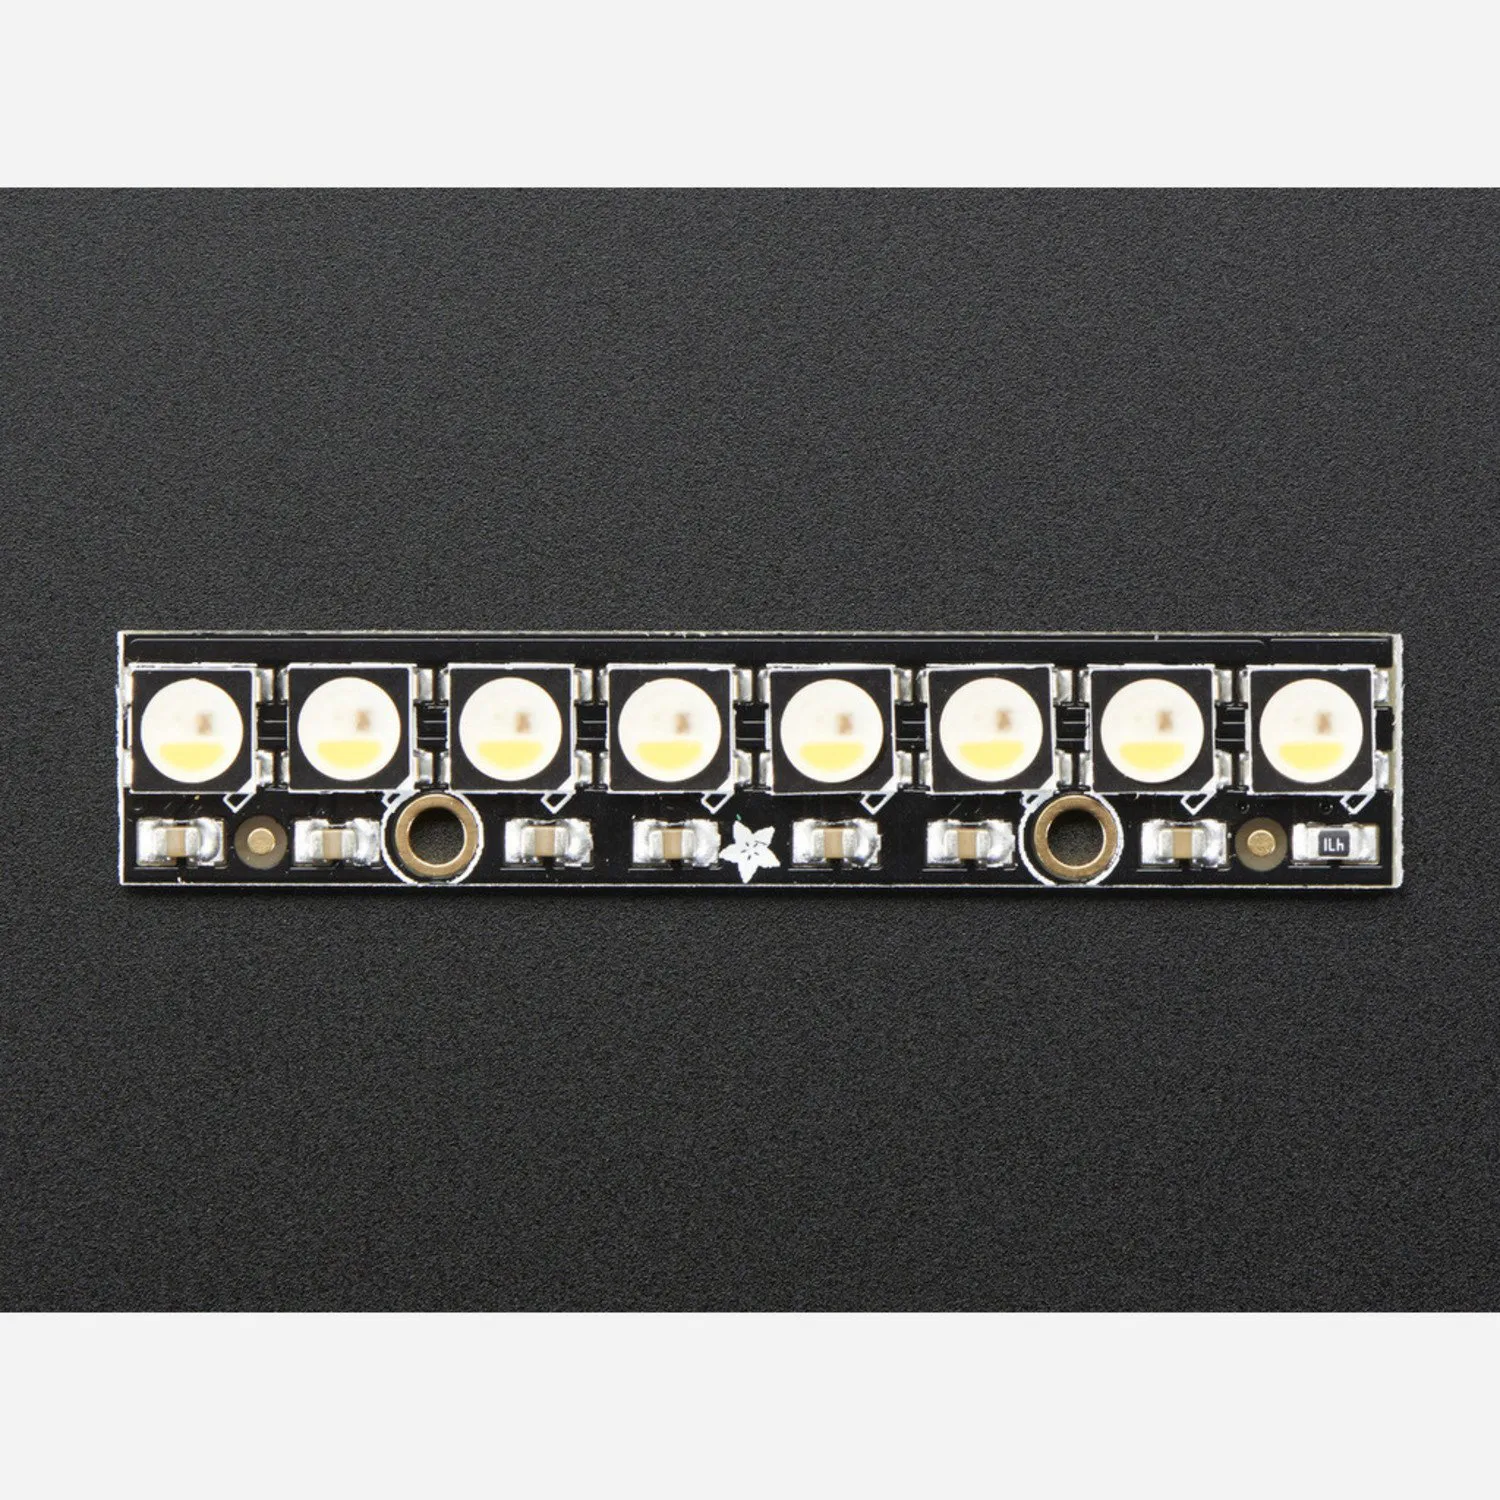 Photo of NeoPixel Stick - 8 x 5050 RGBW LEDs - Warm White - ~3000K